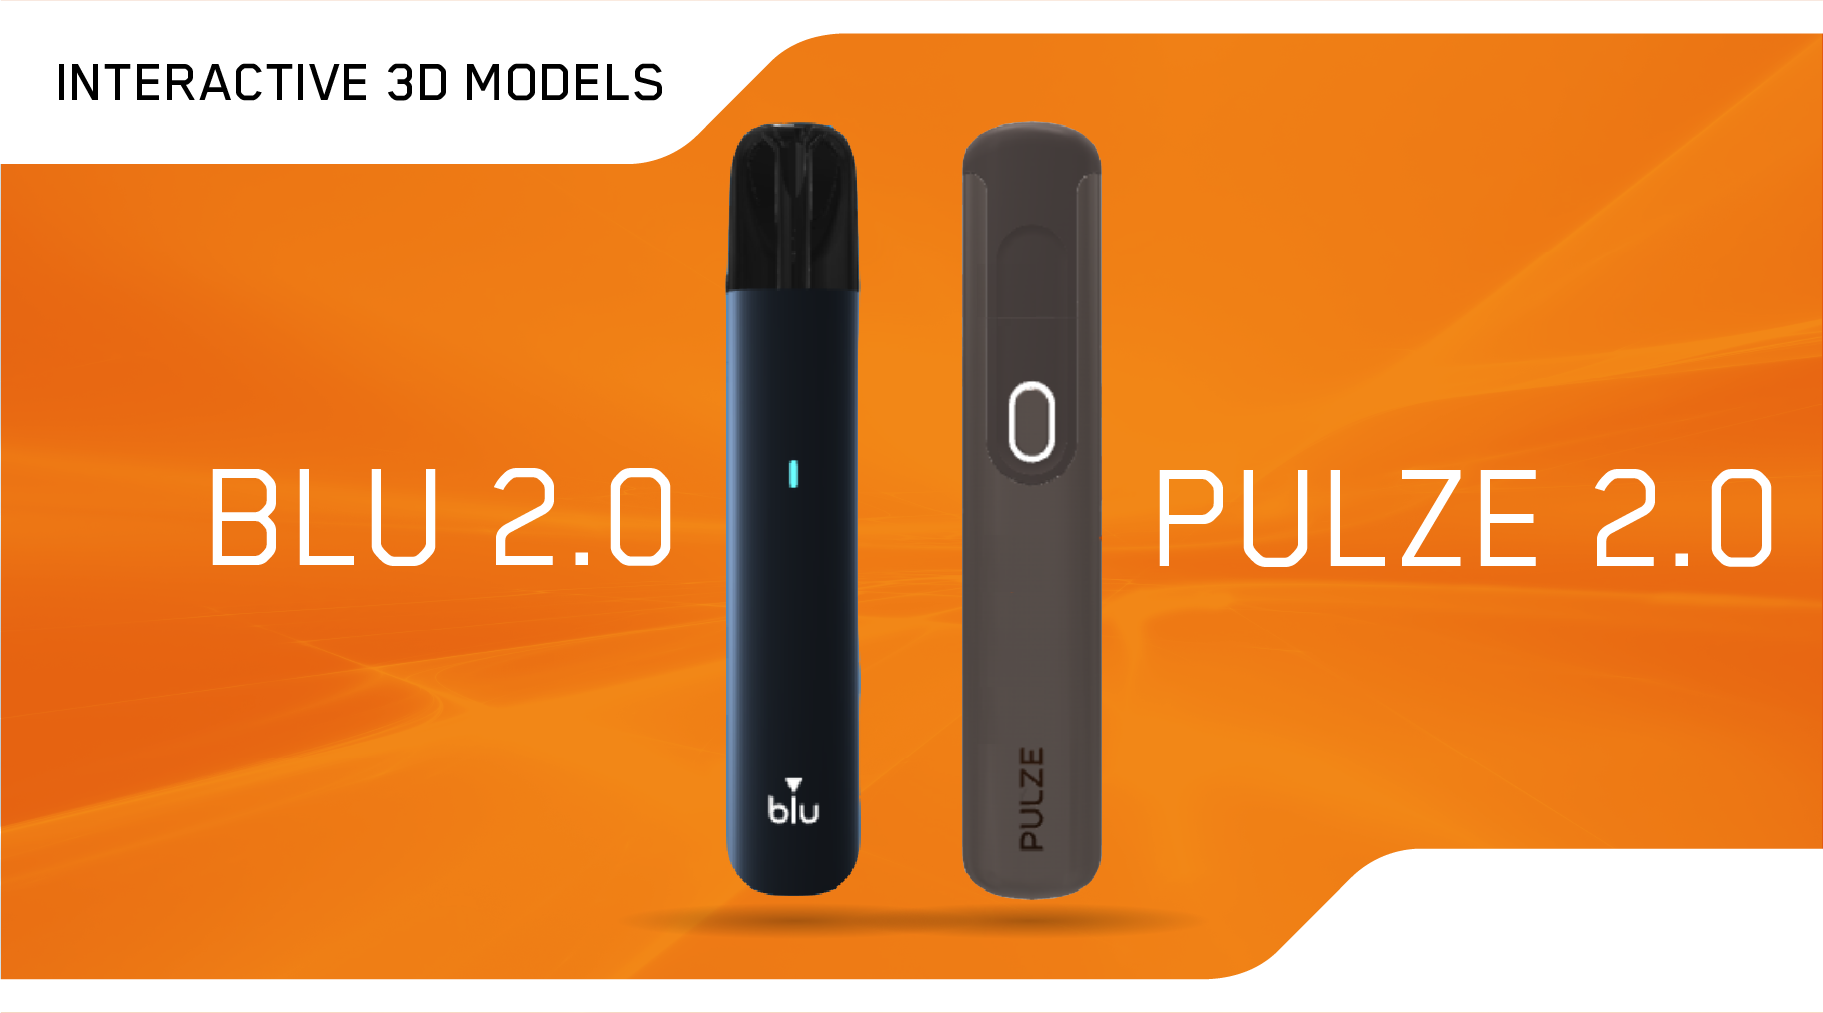 Explore interactive 3D models of Pulze 2.0 & blu 2.0